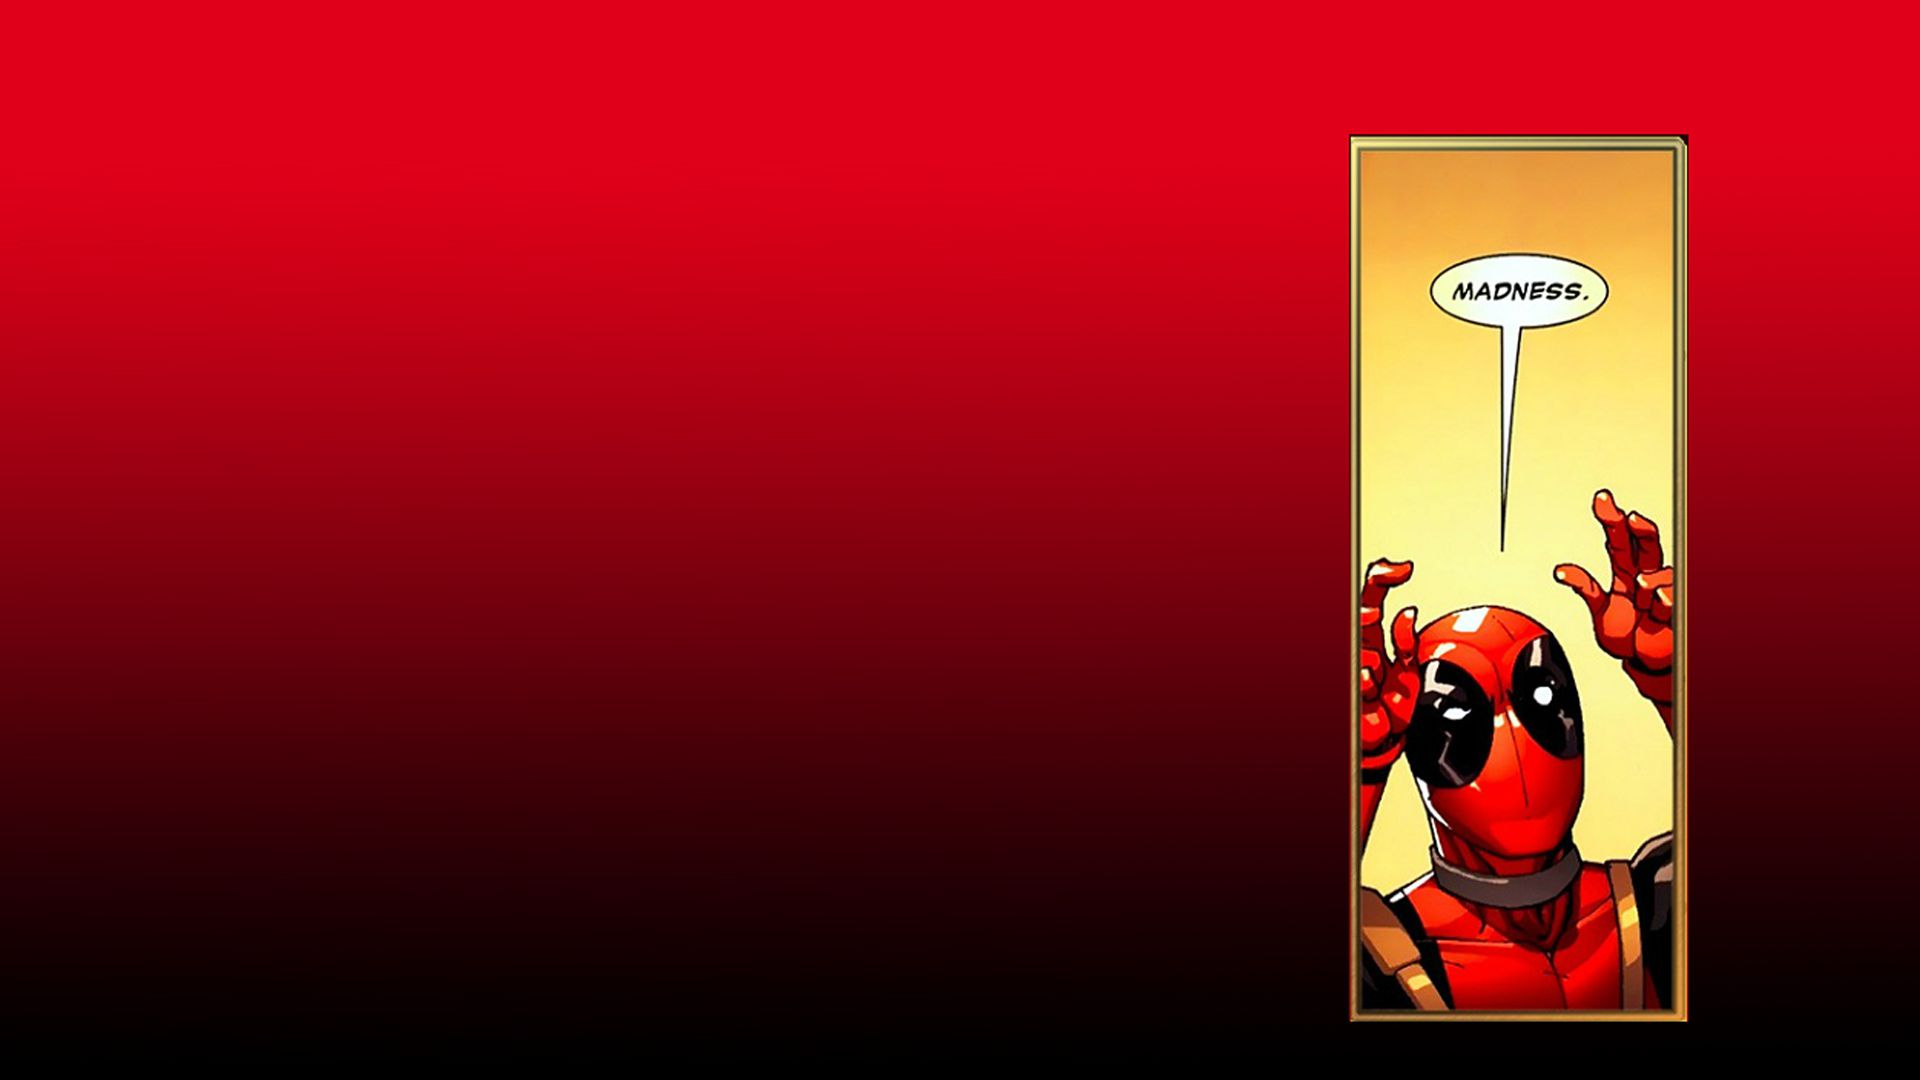 Deadpool BADGUY Wallpaper Full HD Free Download